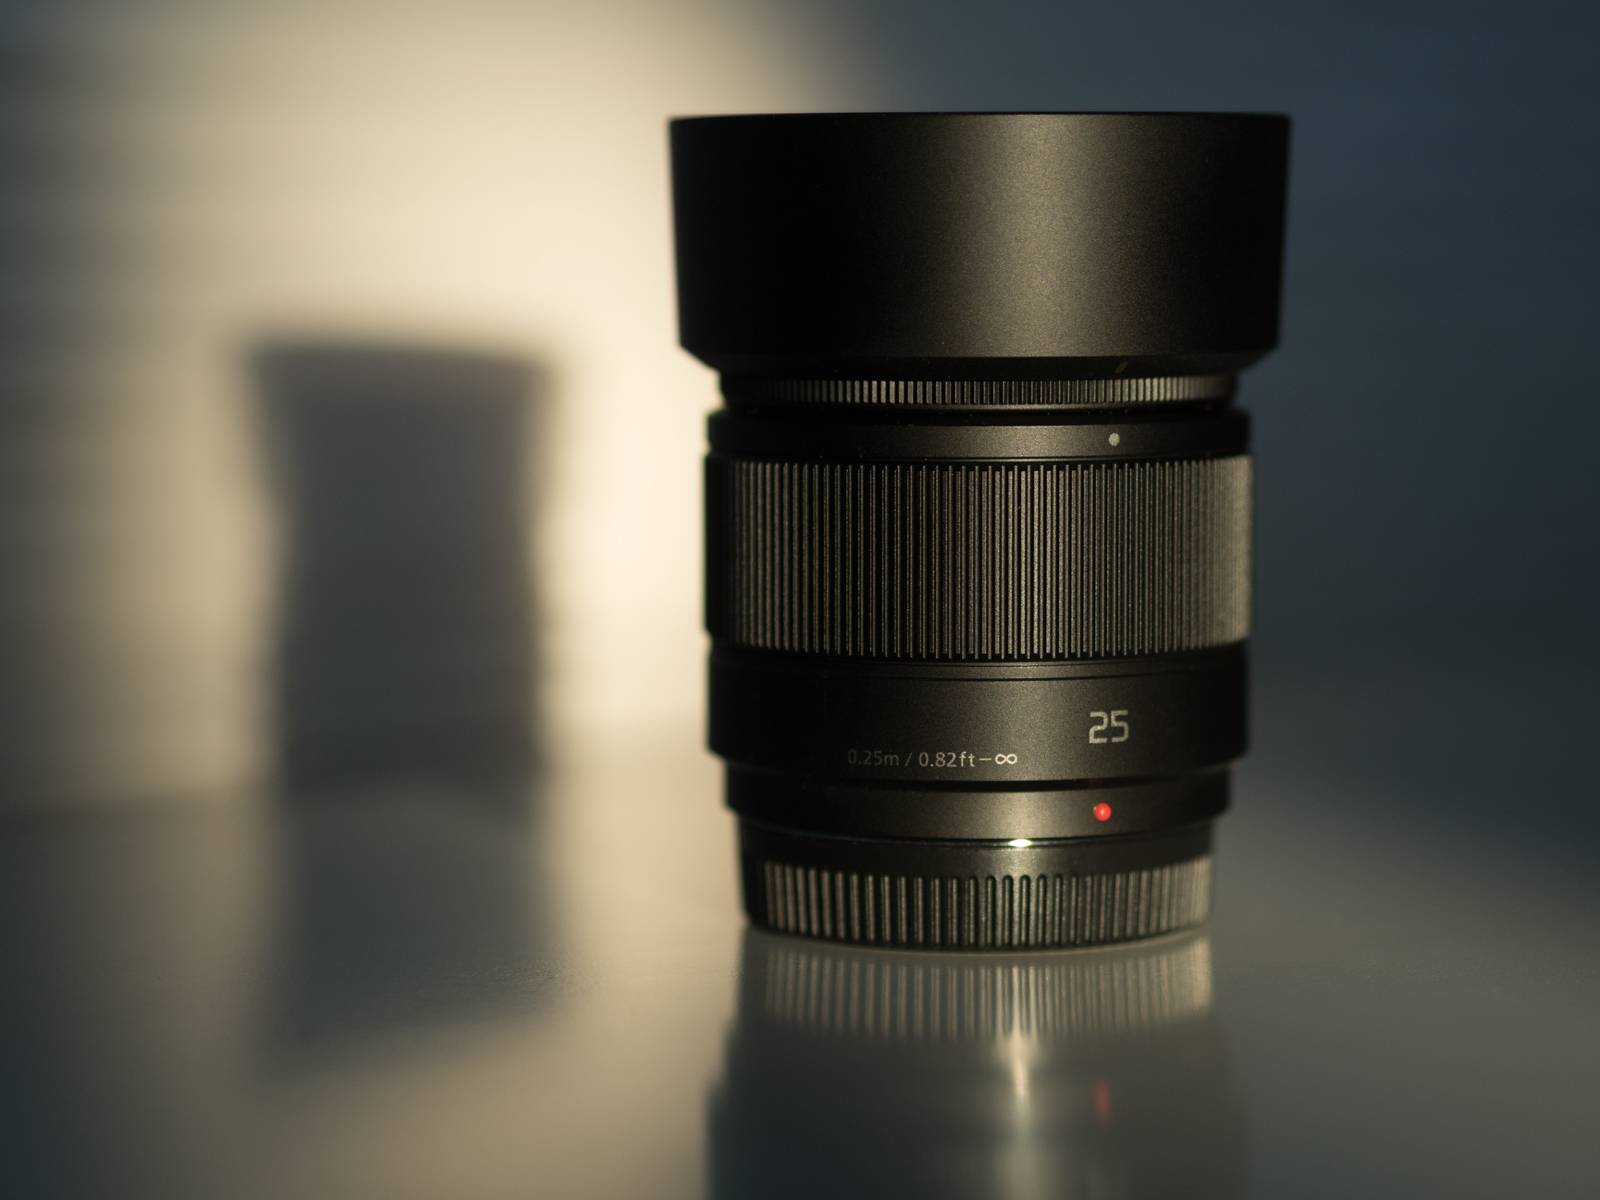 Panasonic Lumix 25mm 1.7 Review + images – 43rds Lenses | Peter Tsai Photography Blog